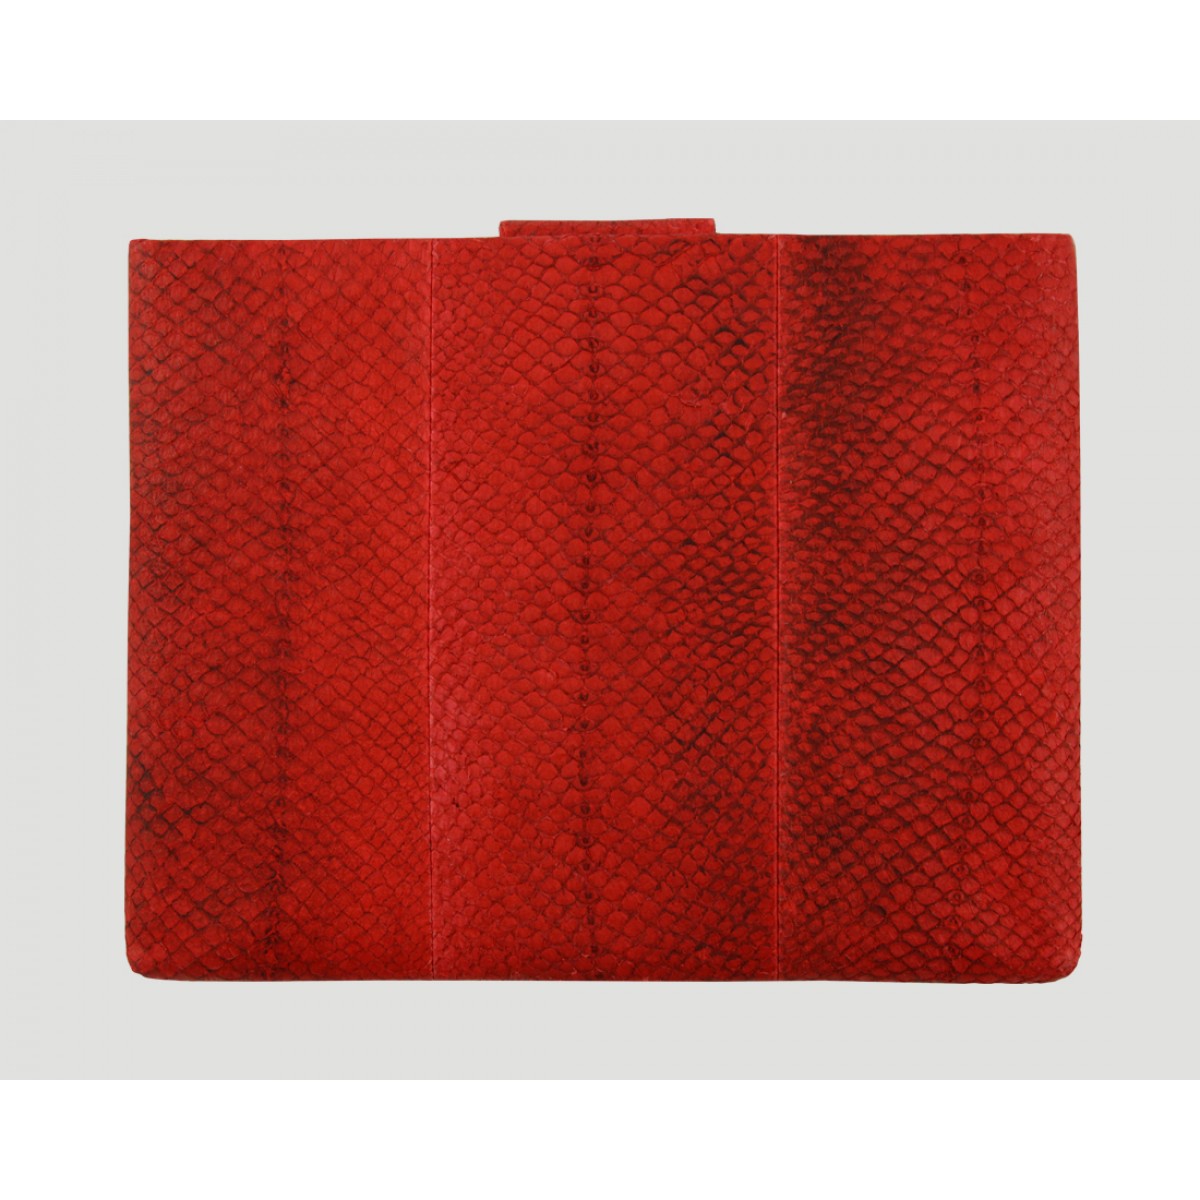 iPad case Lachsleder, rot